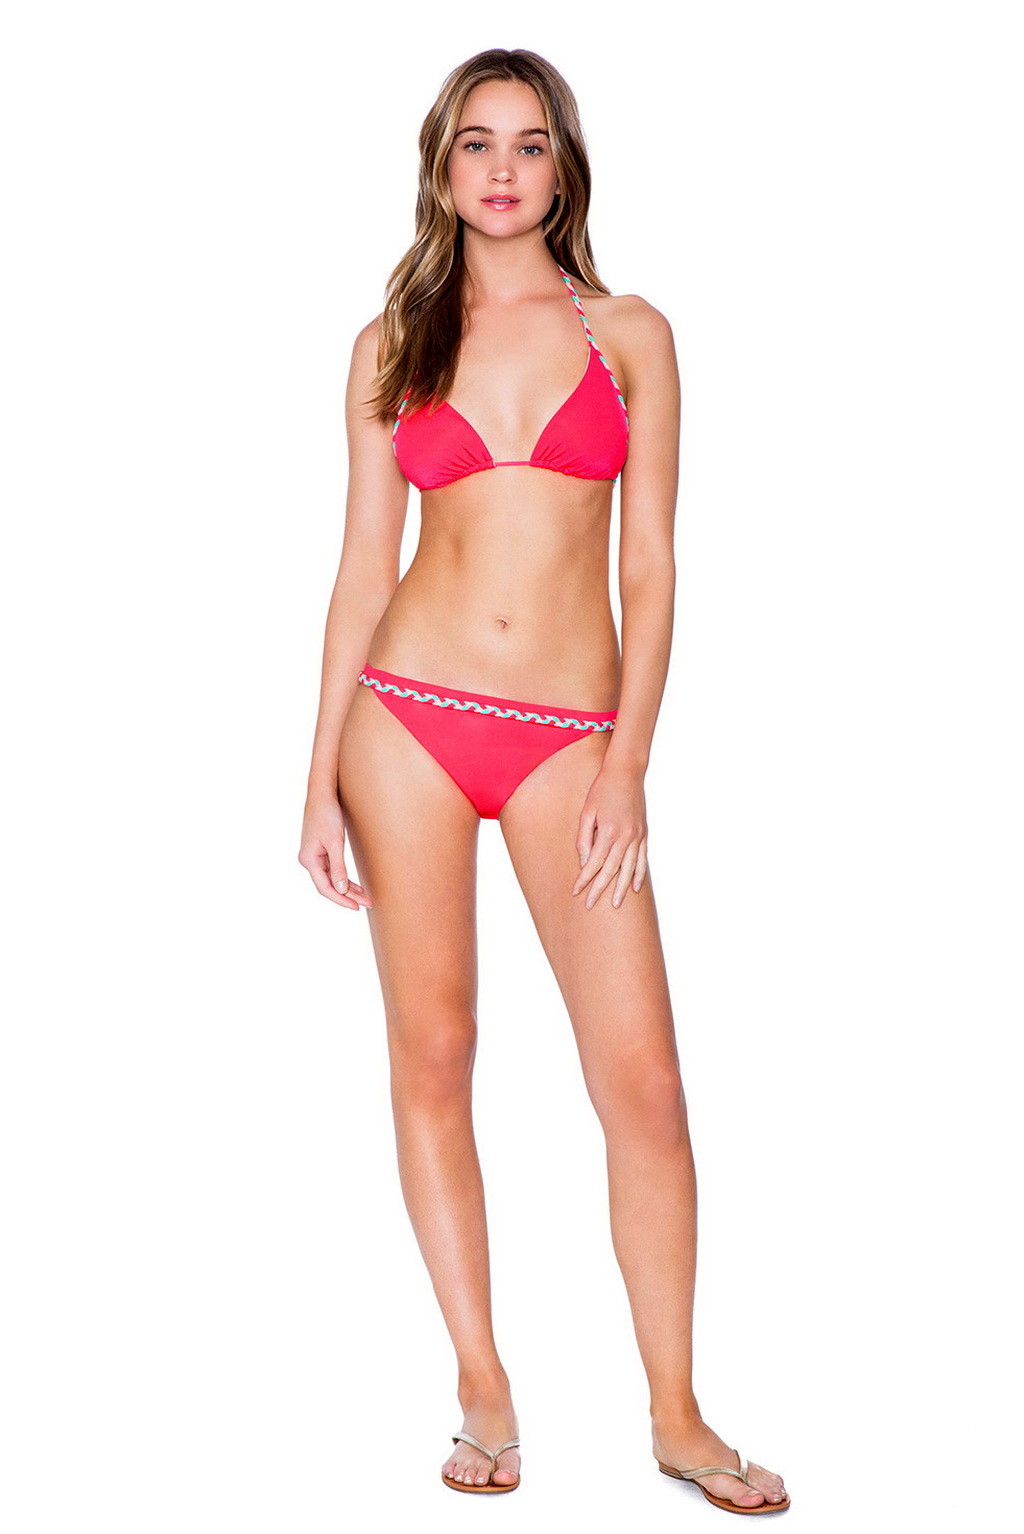 Rosie tupper posando en bikinis shoshanna muy sexy
 #75153716